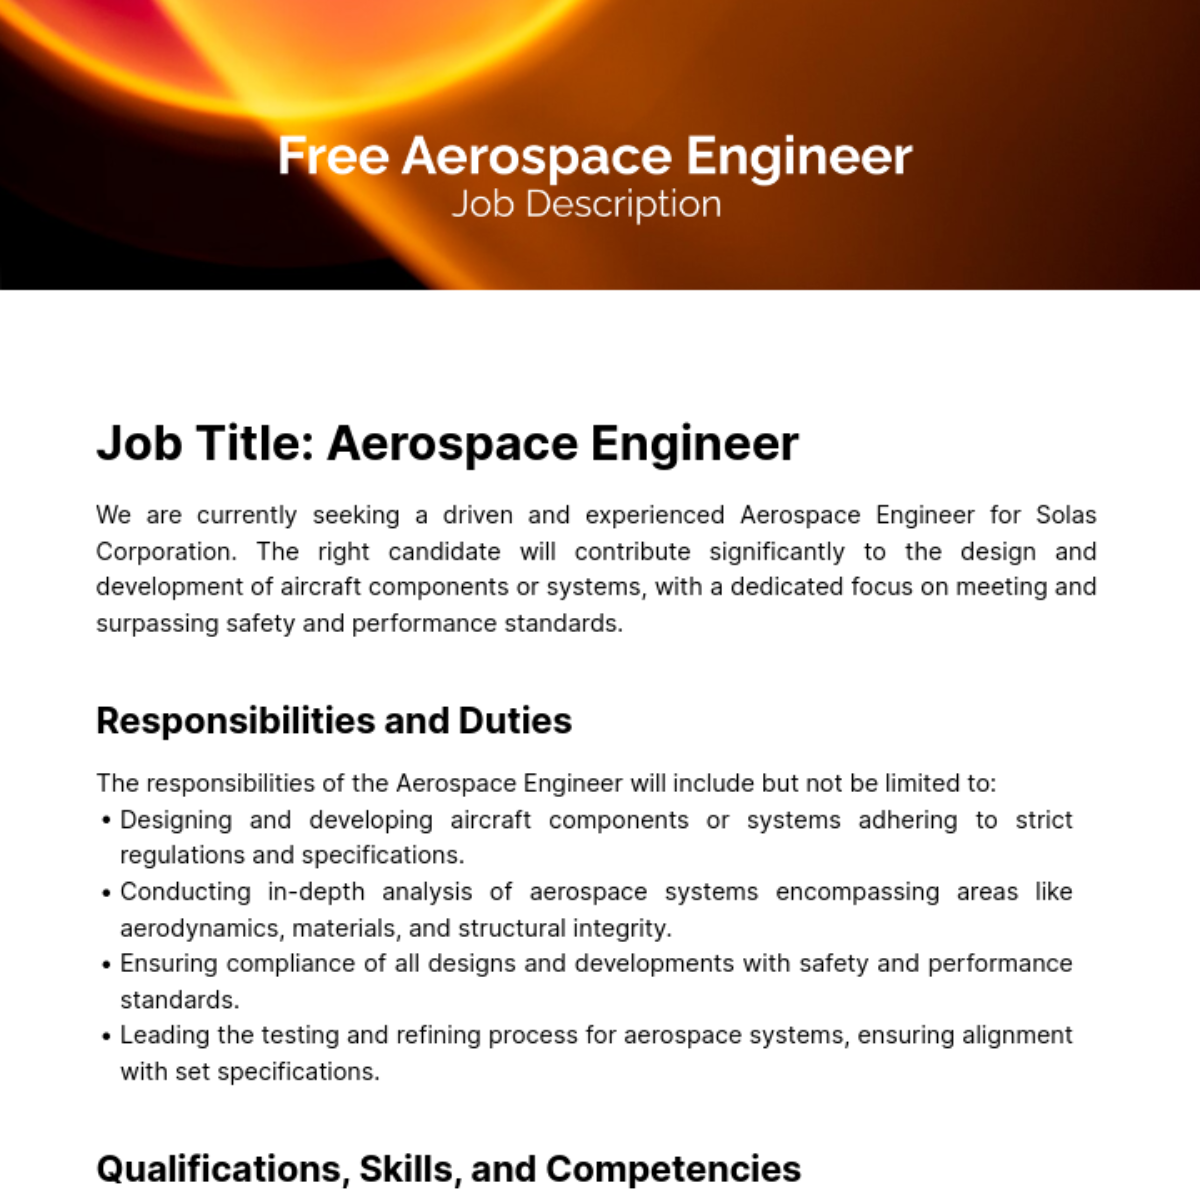 Free Aerospace Engineer Job Description Template